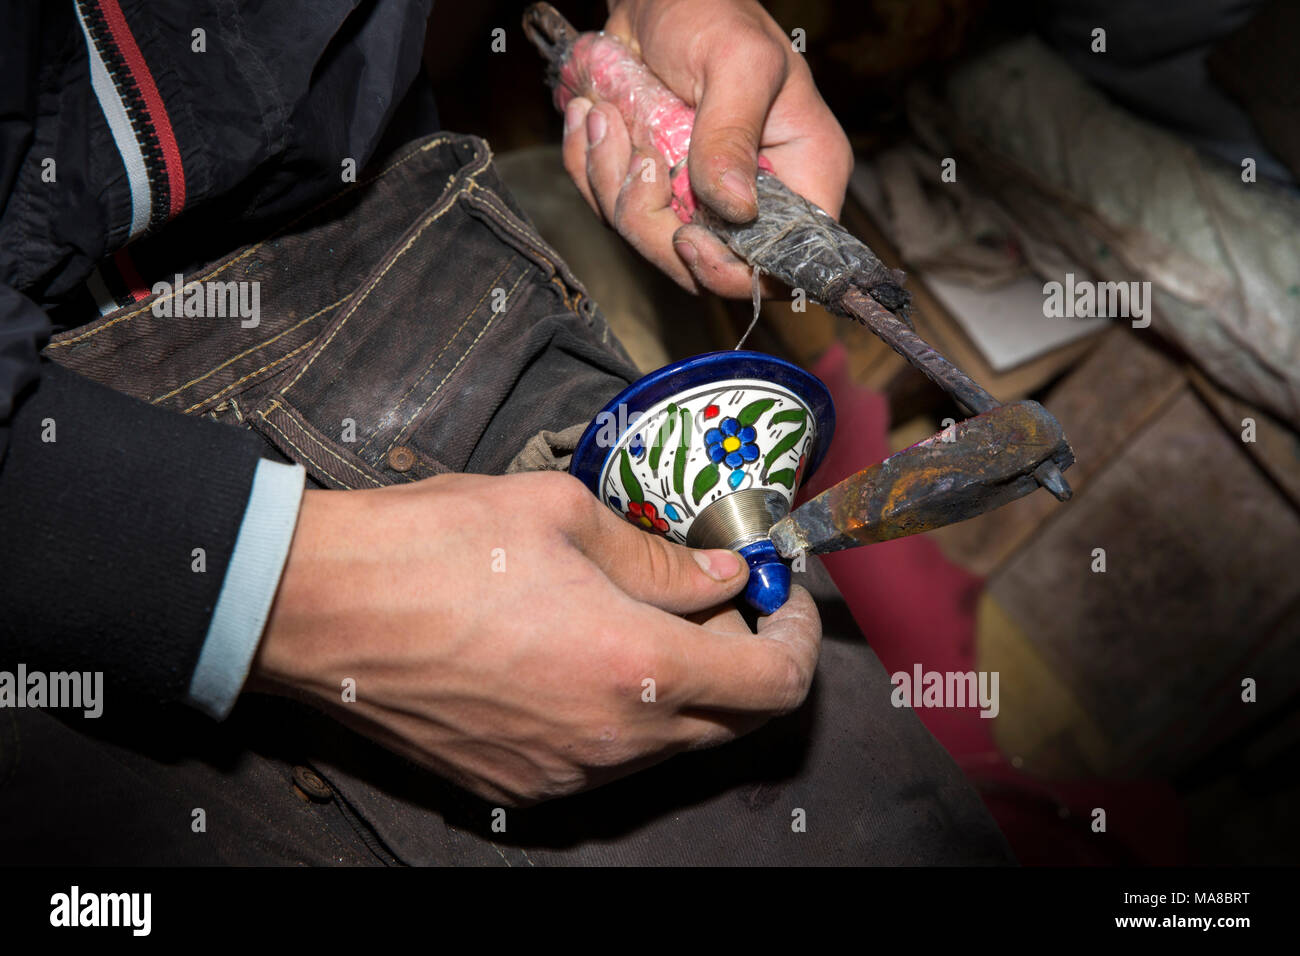 Morocco, Fes, Quartier des Potiers, Pottery, worker soldering silver decoration onto pot lid Stock Photo